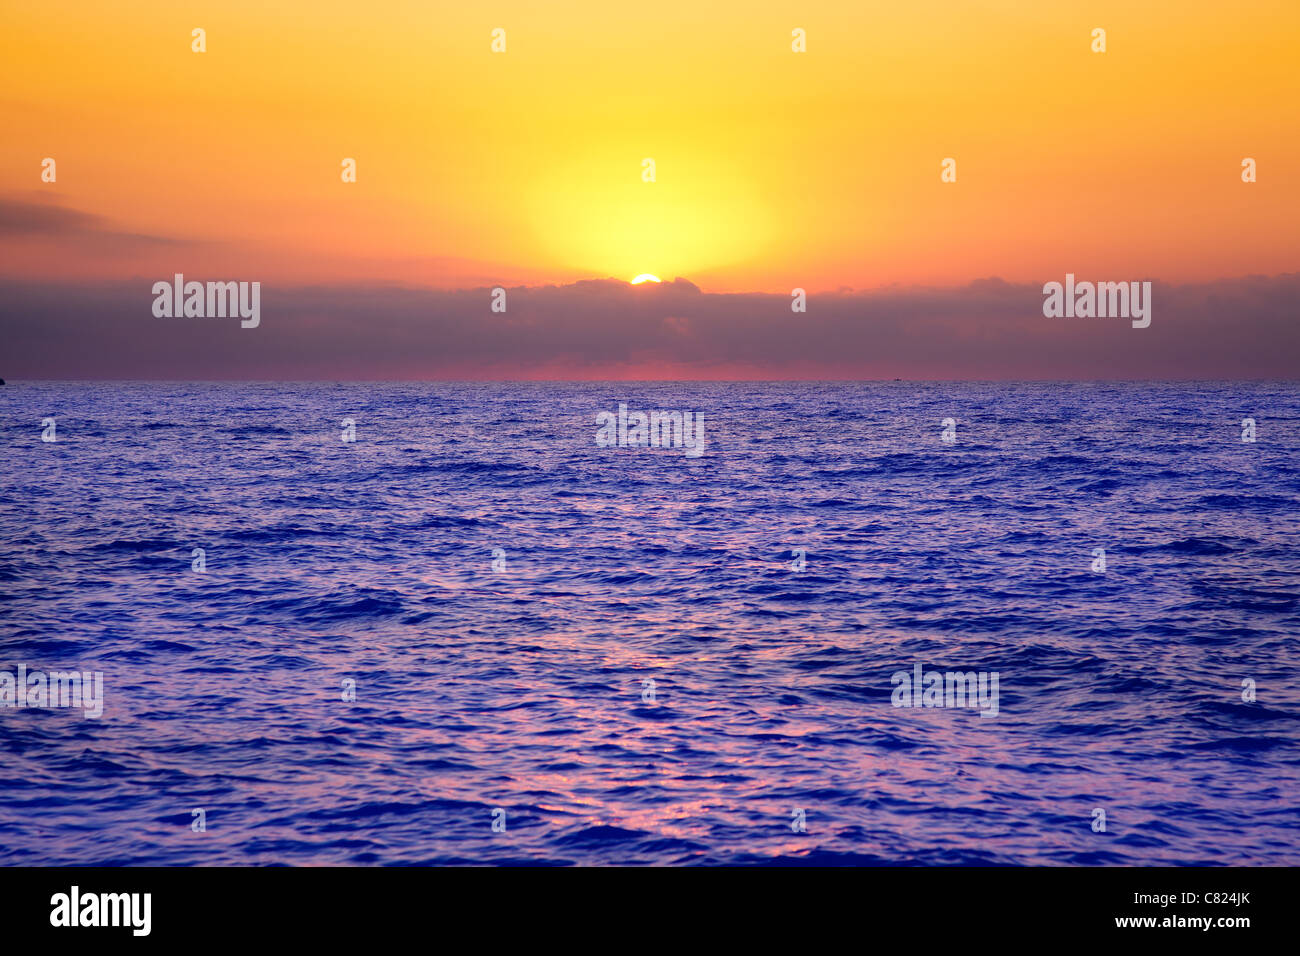 Mediterranean sea sunrise with orange sky and purple ocean Stock Photo